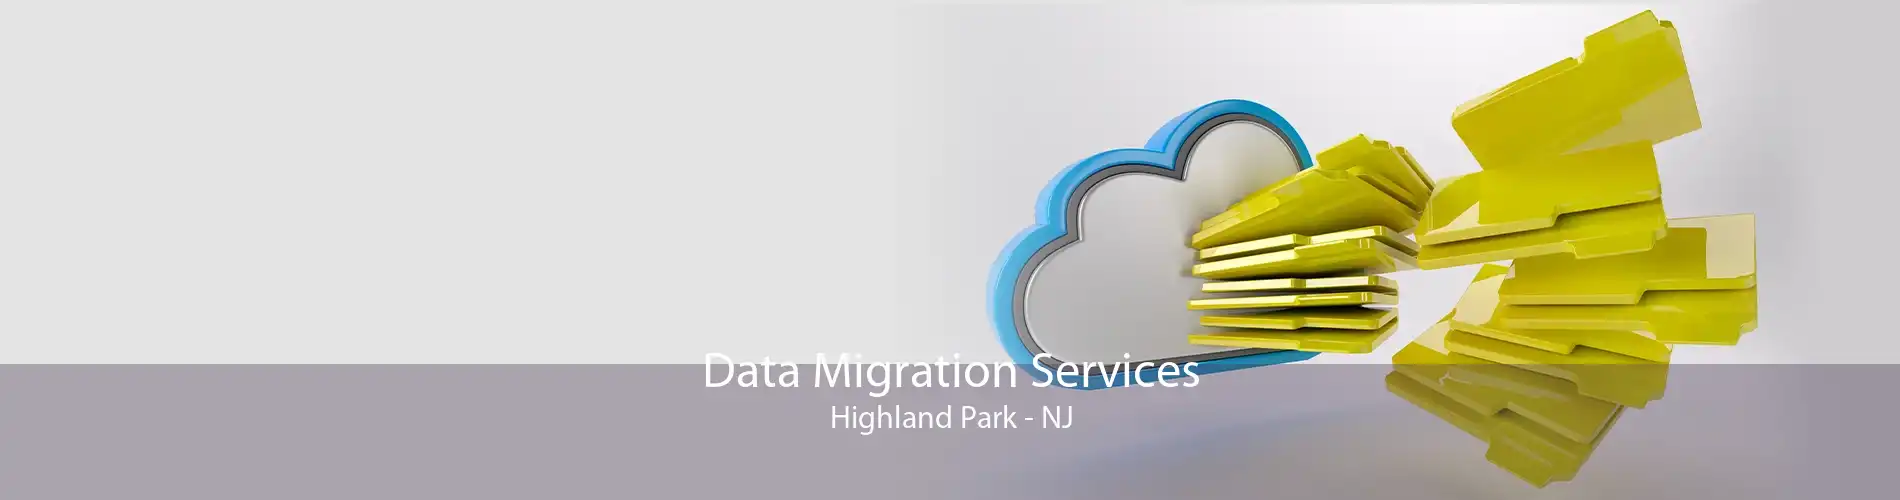 Data Migration Services Highland Park - NJ